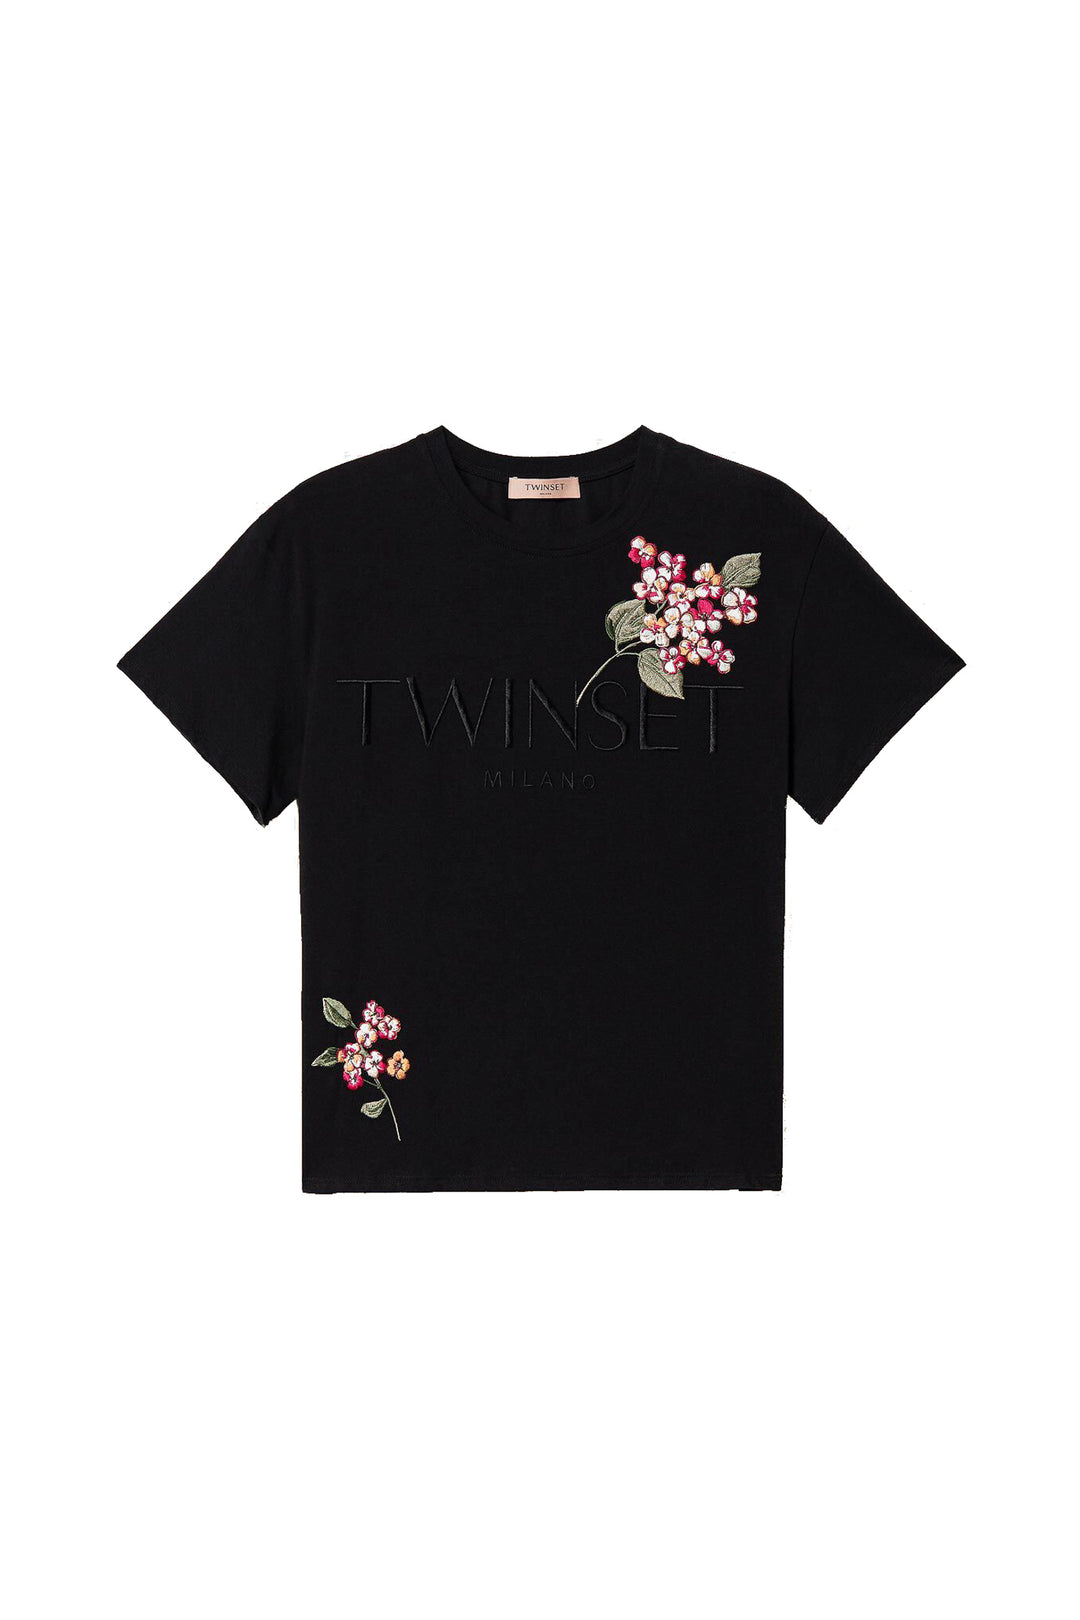 TWINSET T-shirt nera con logo e ricamo floreale - Mancinelli 1954